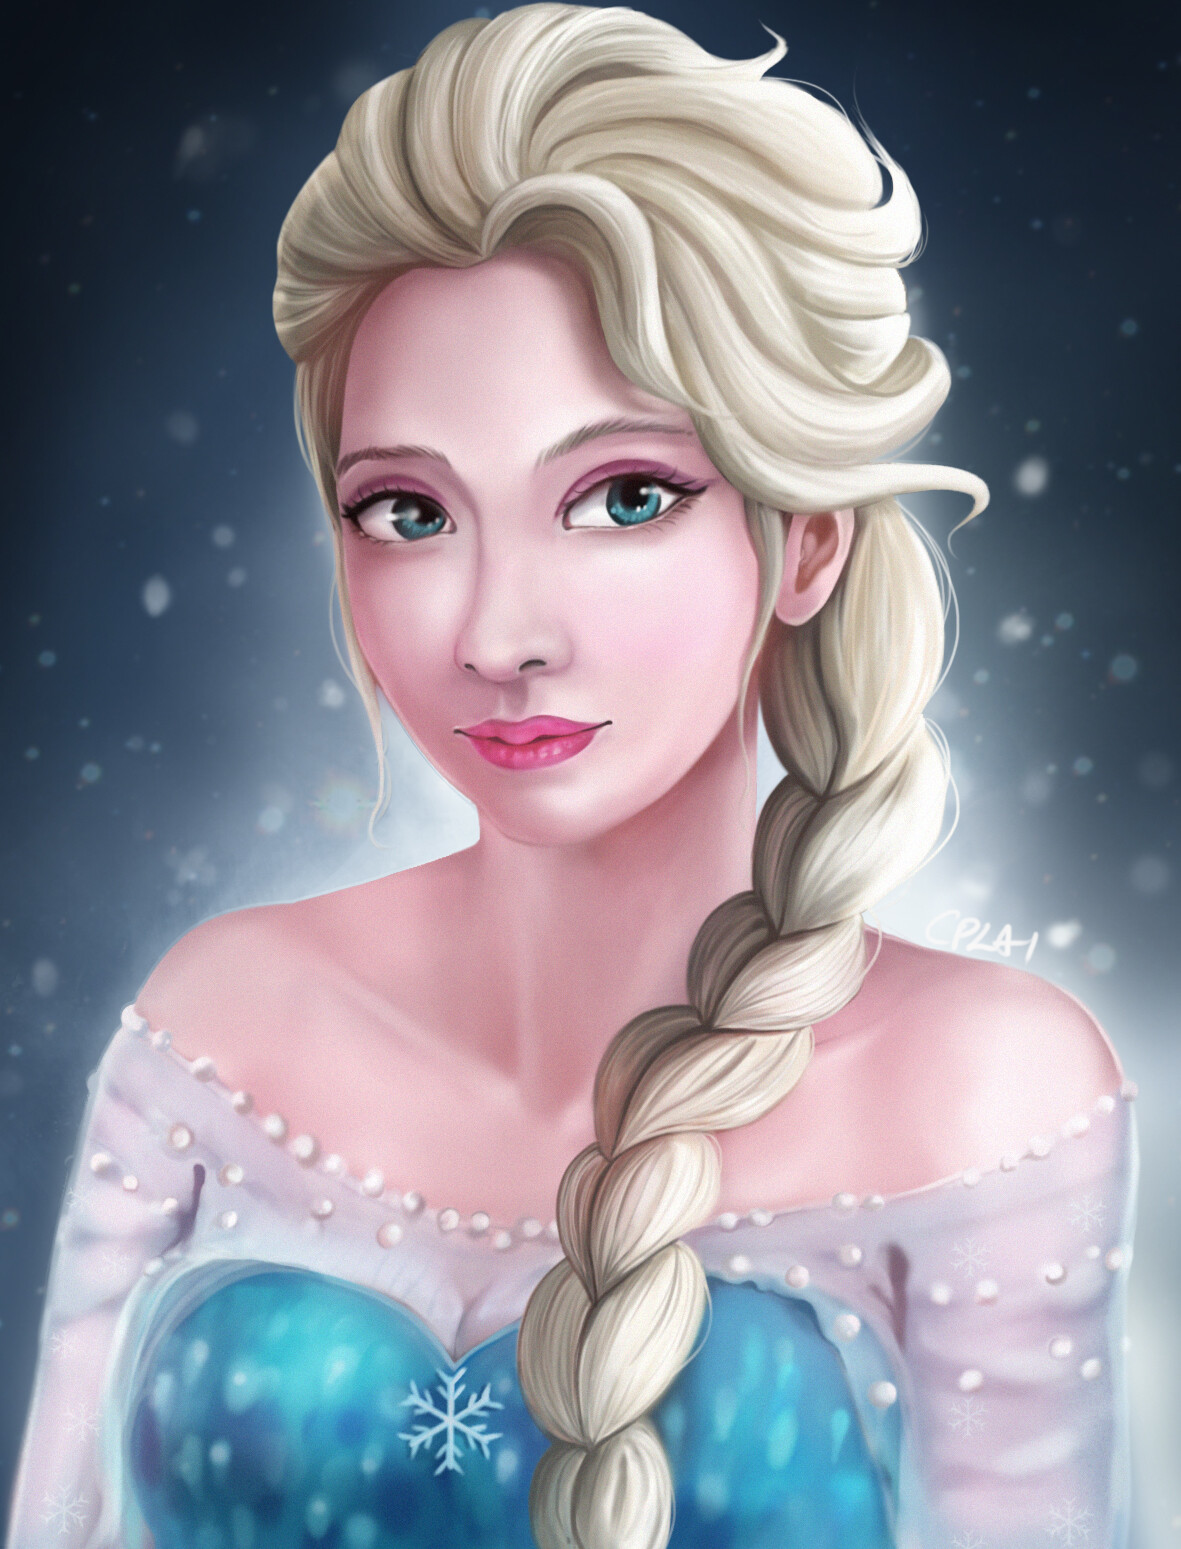 ArtStation - DIsney Frozen_Elsa FanArt